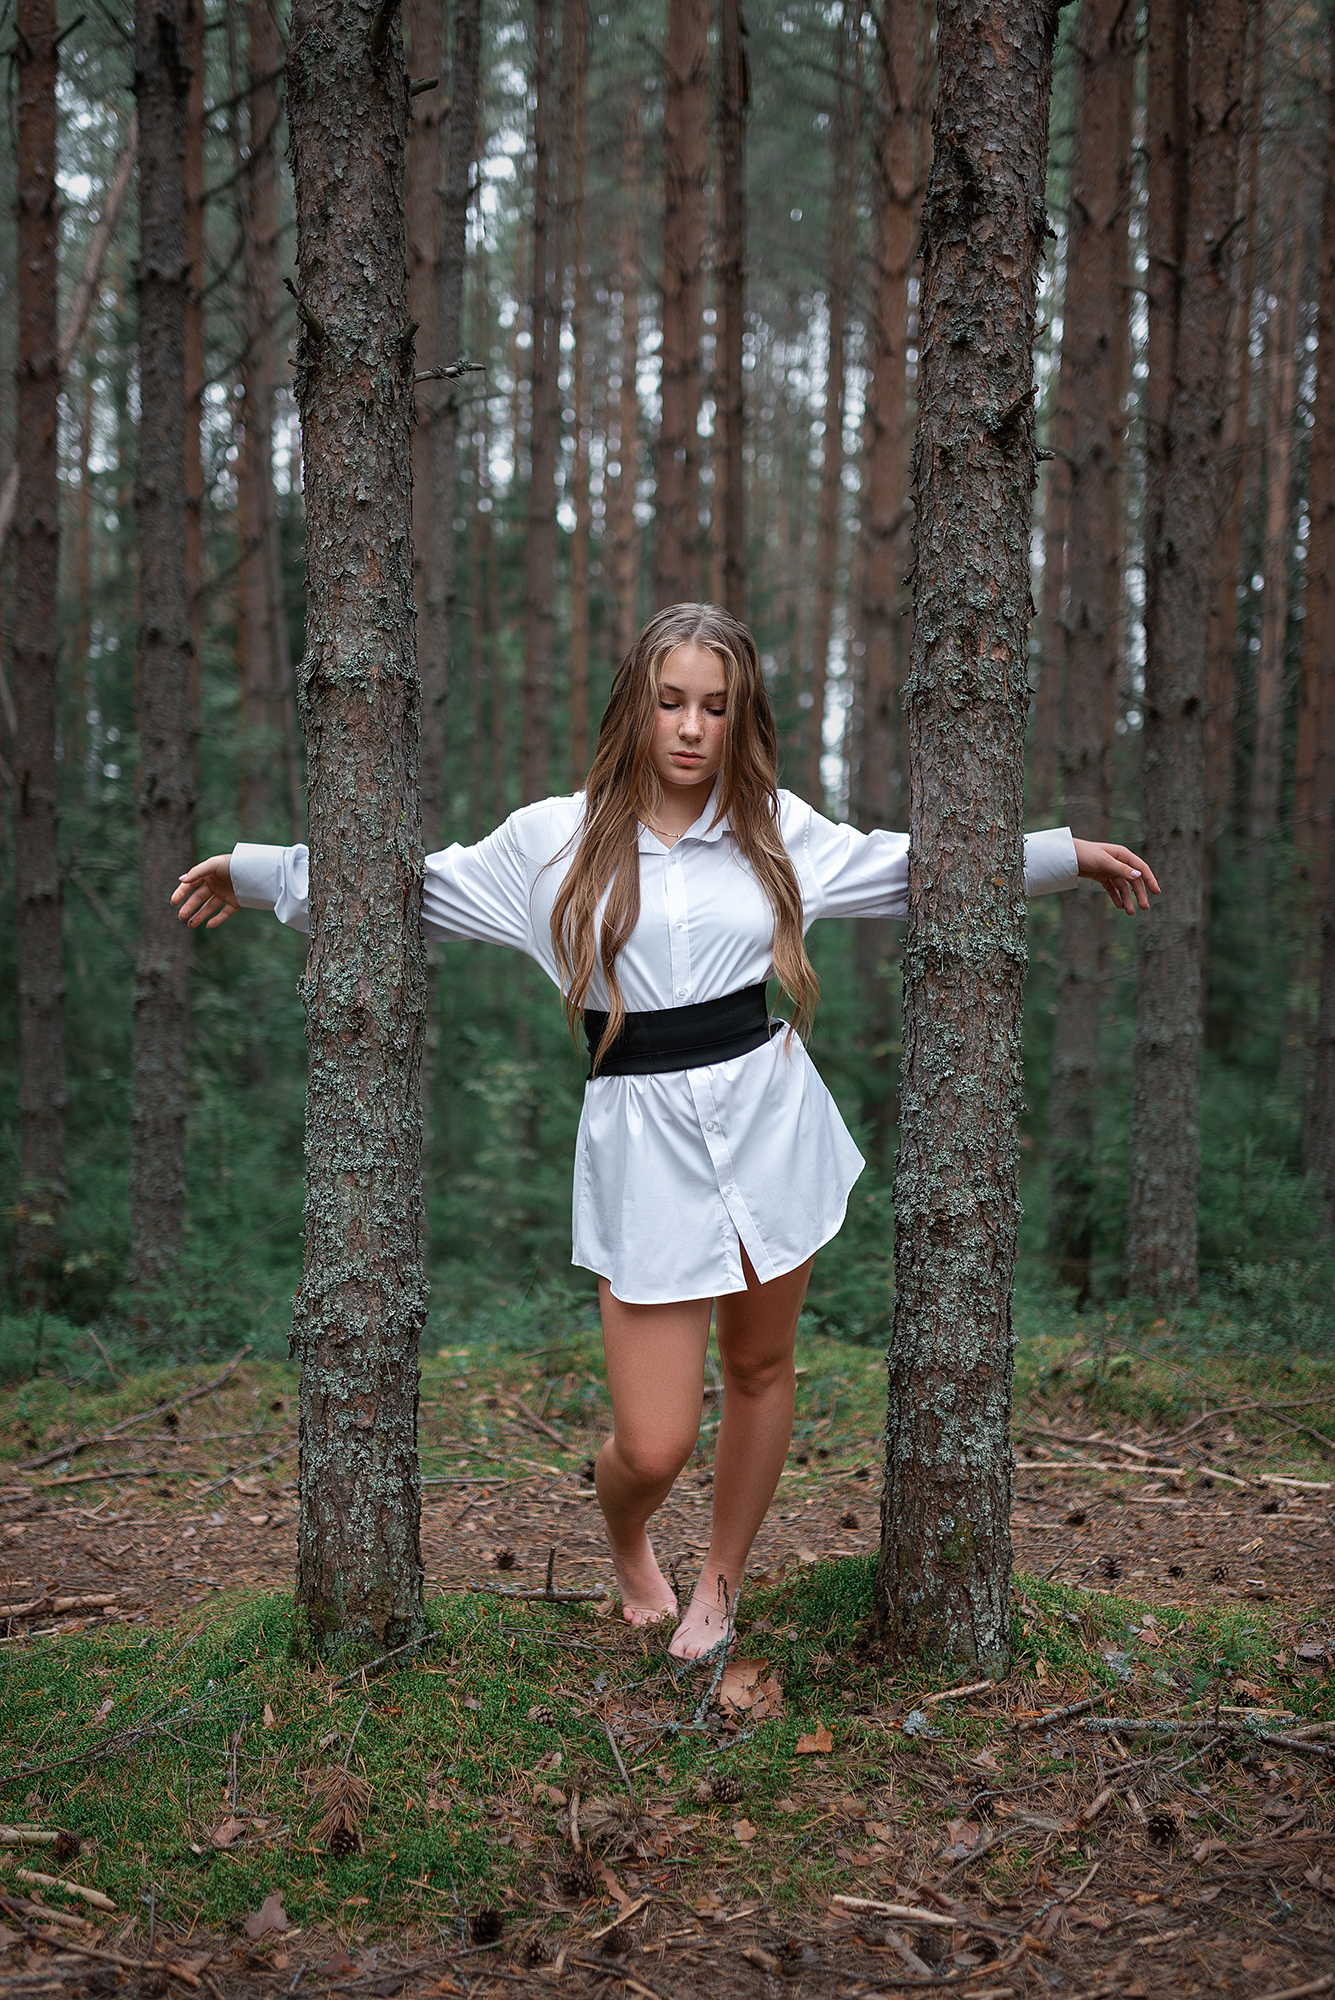 В лесу в юбке без трусов (73 фото) - порно и эротика укатлант.рф